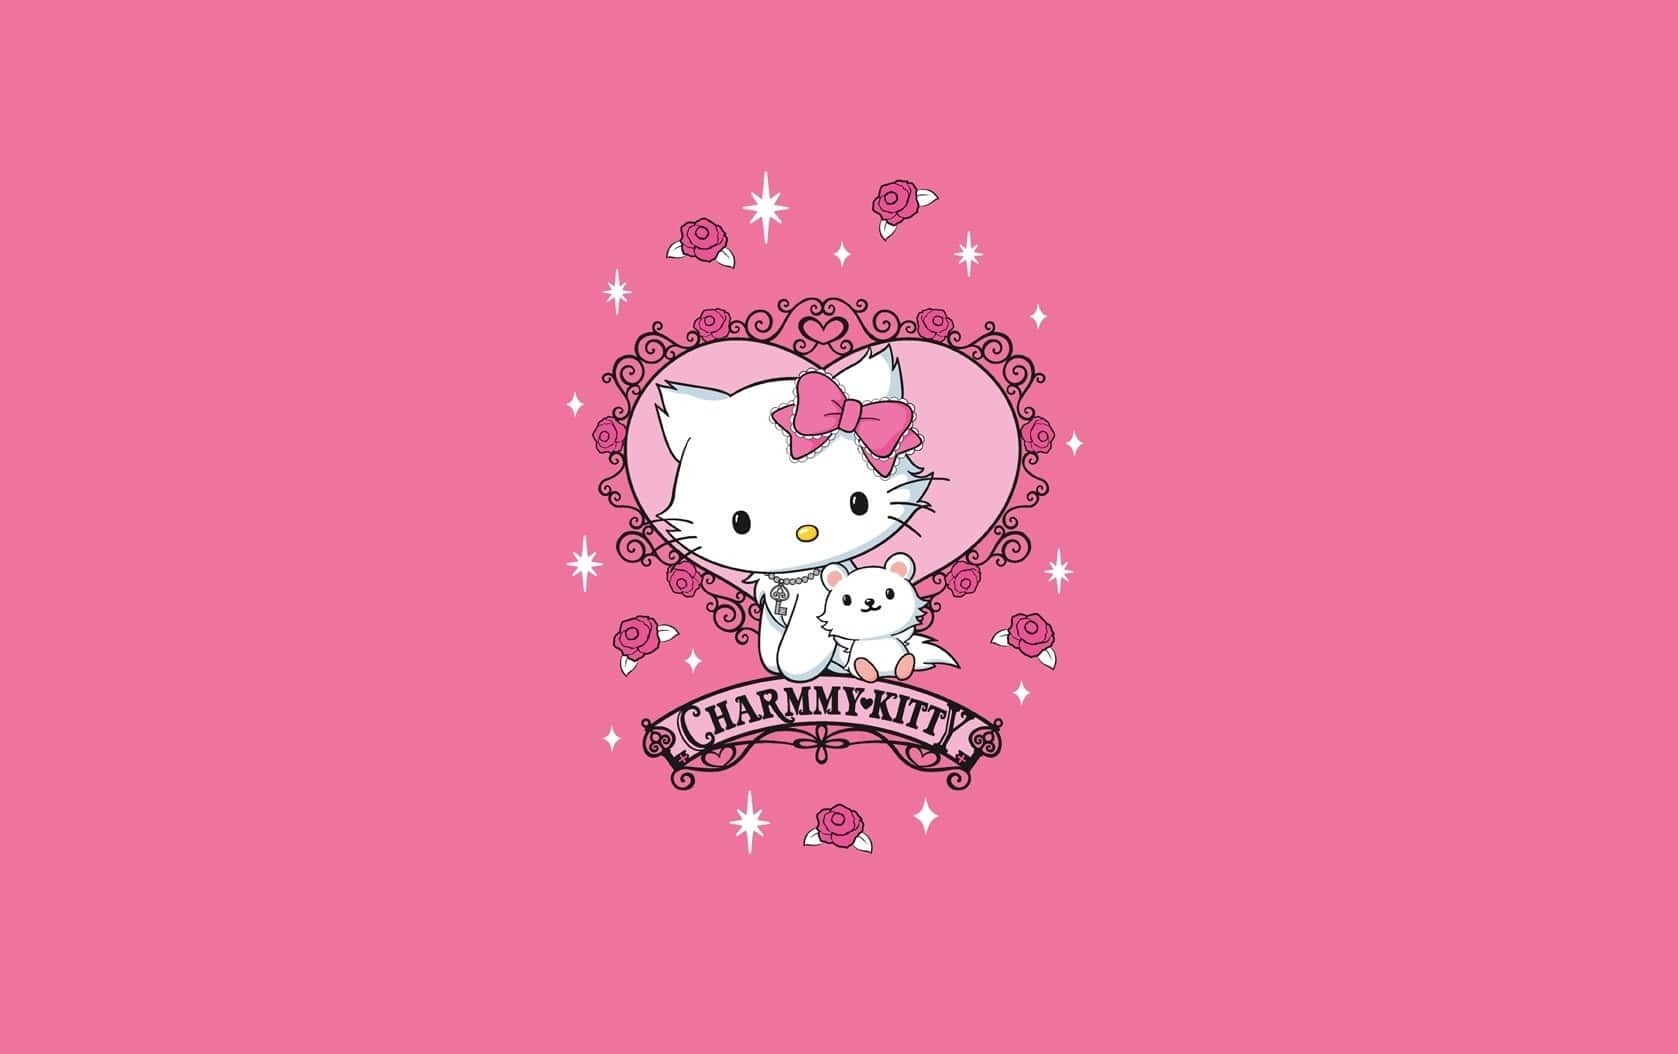 Hello Kitty Wallpaper Nawpic